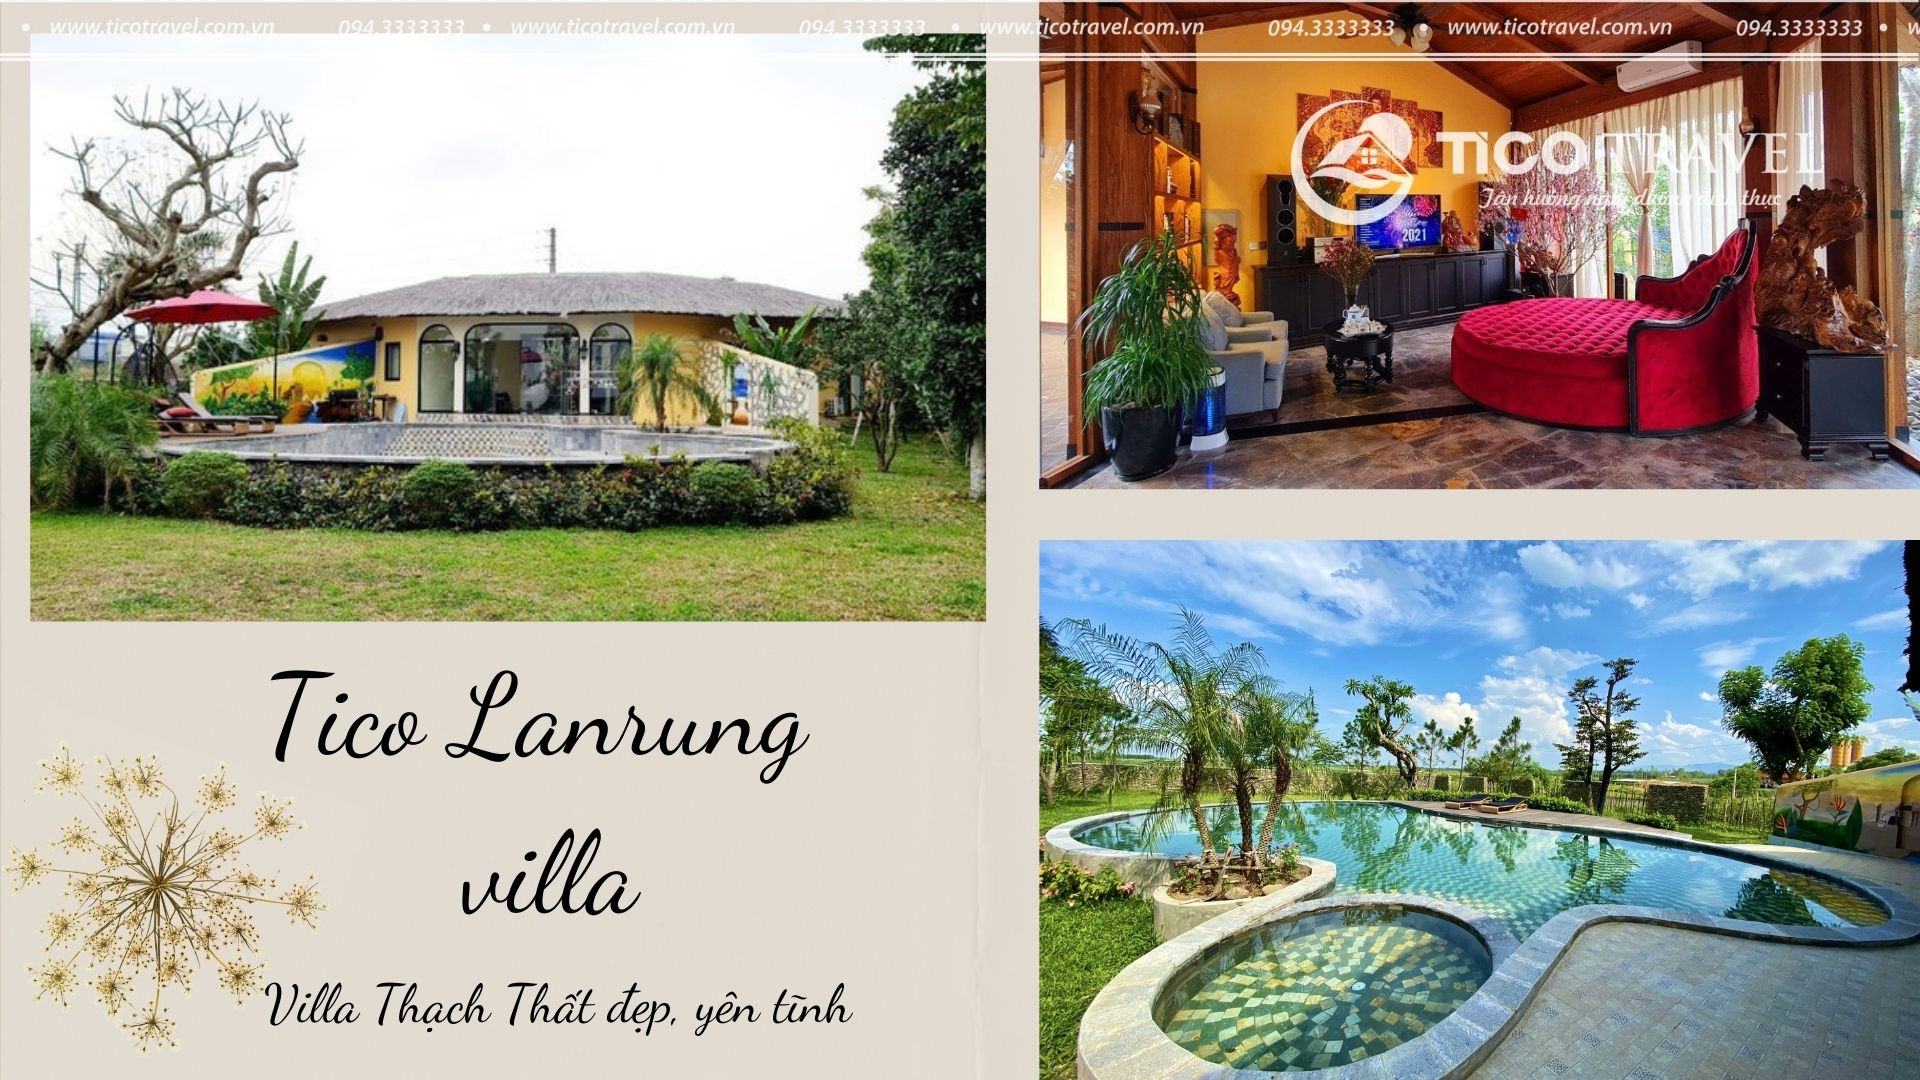 ảnh chụp Tico Lanrung house villa